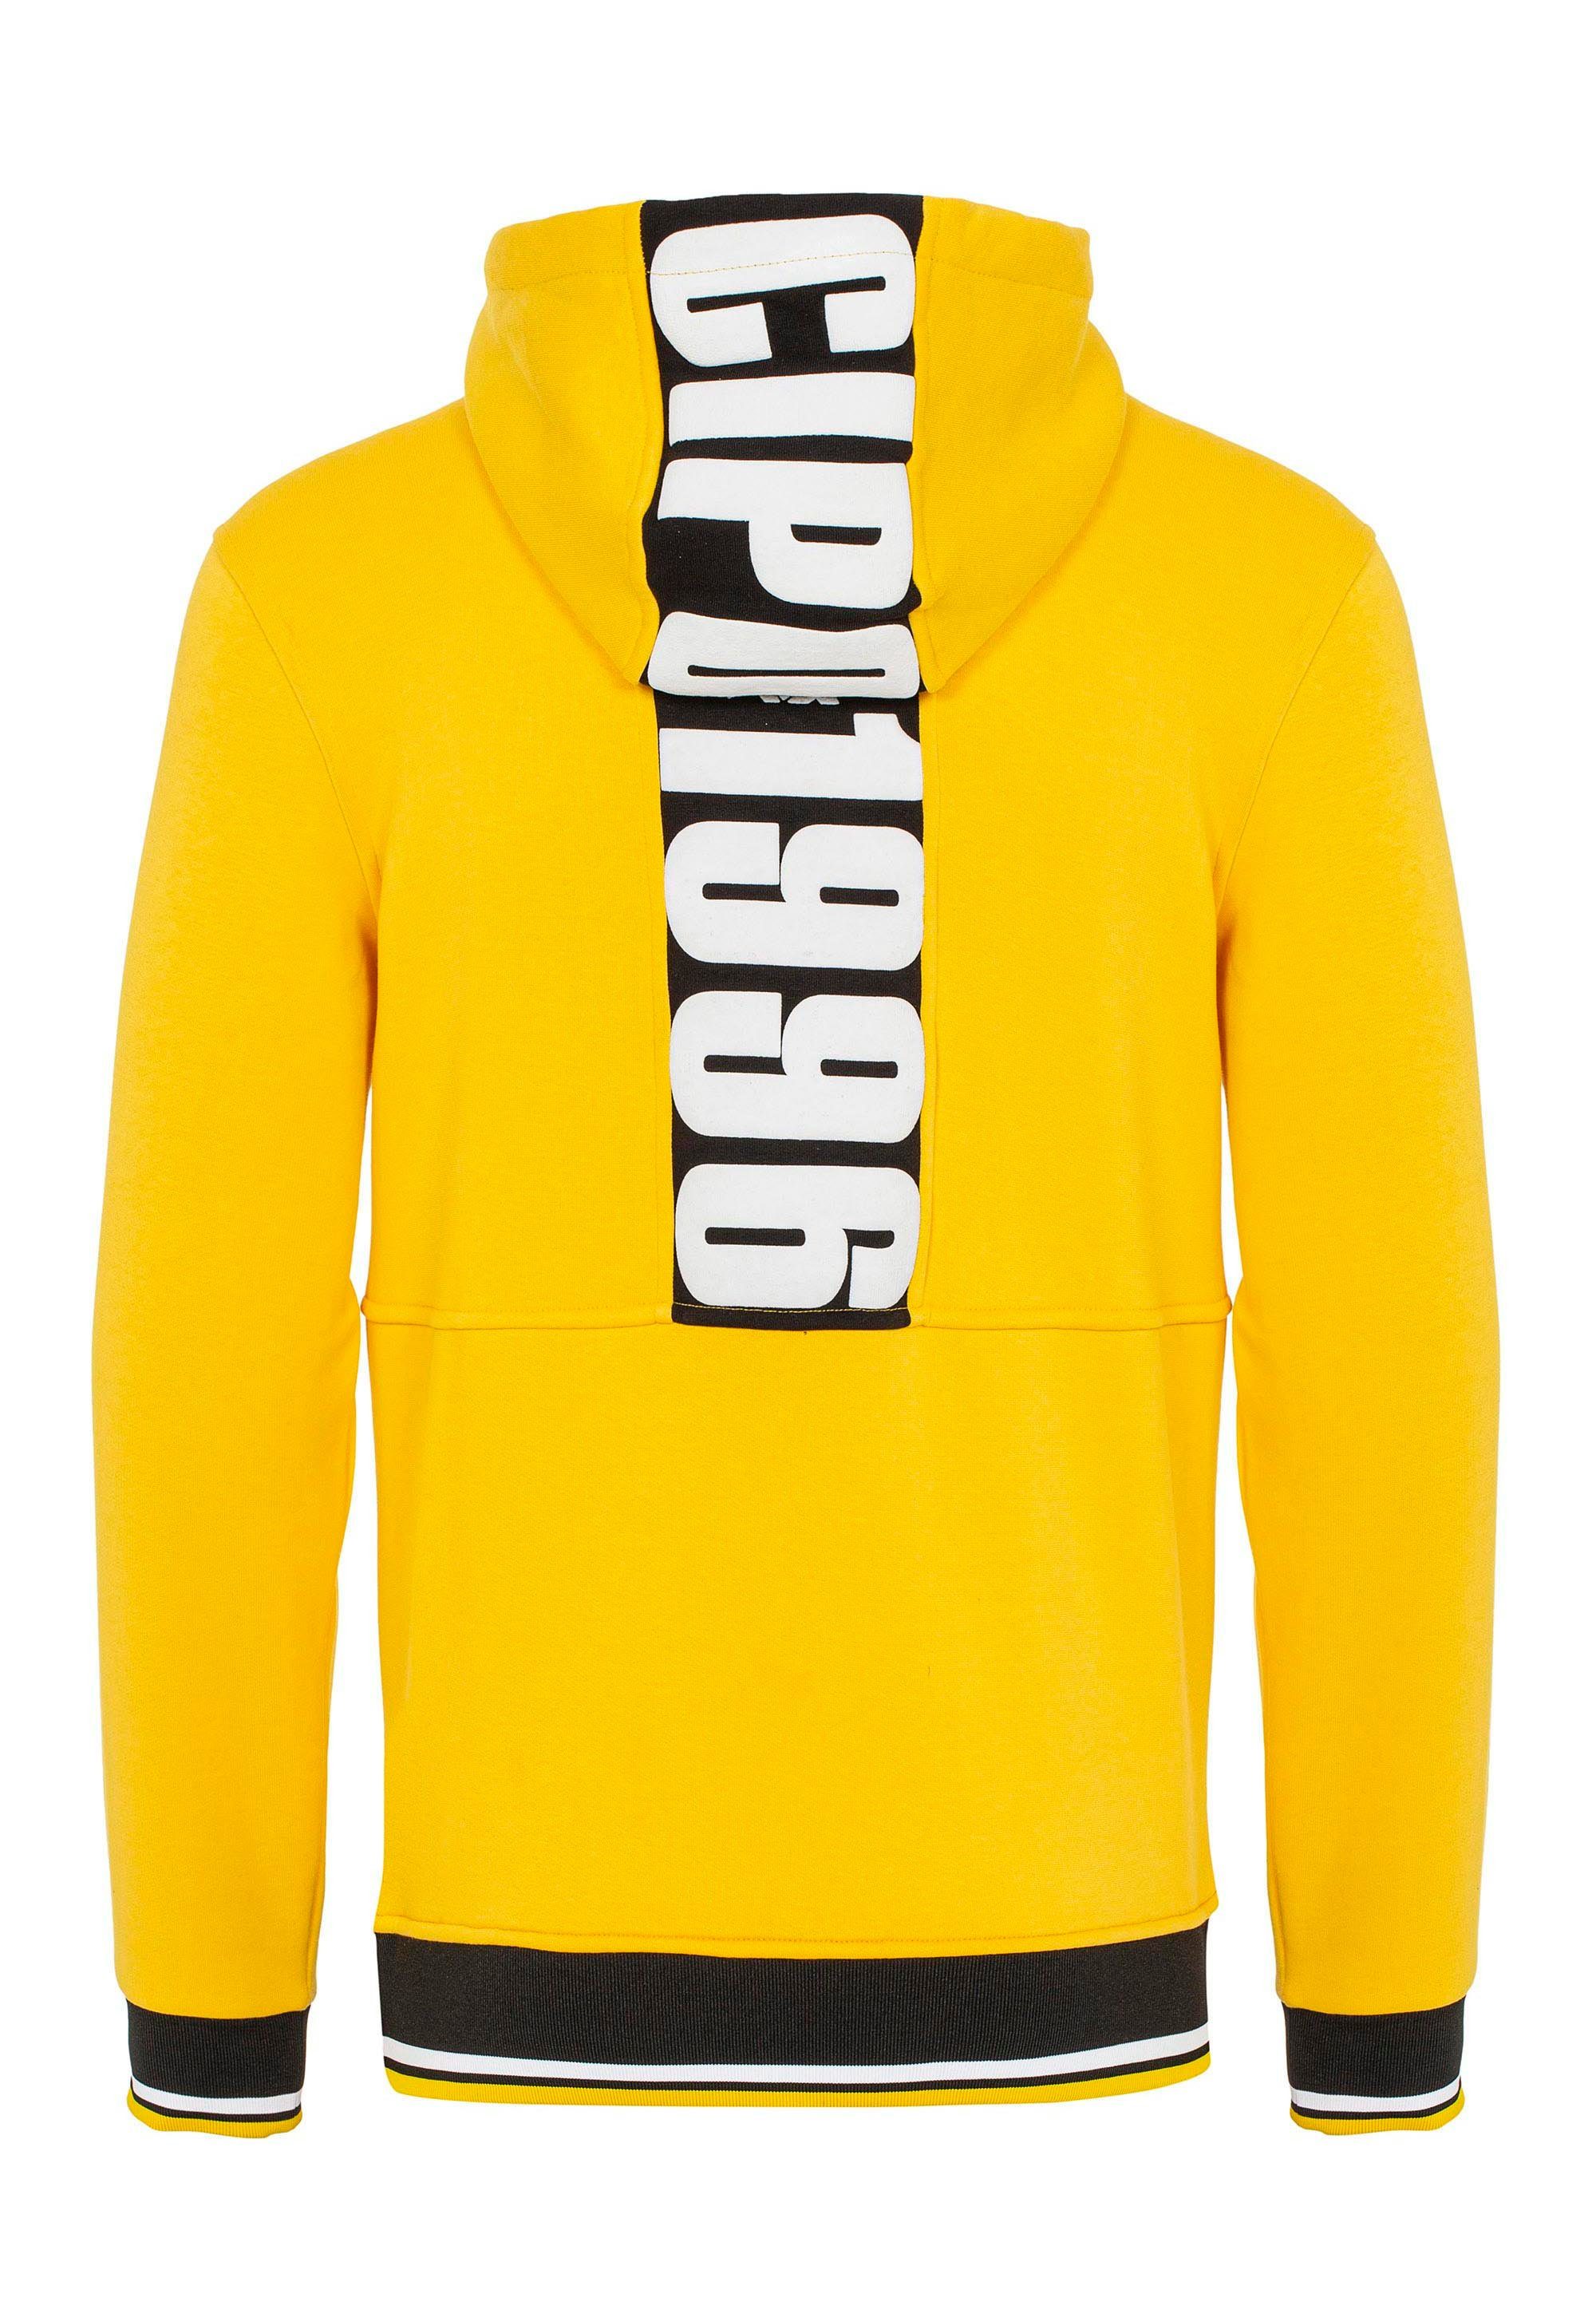 Cipo & Baxx tollen gelb Kapuzensweatshirt mit Markenprints